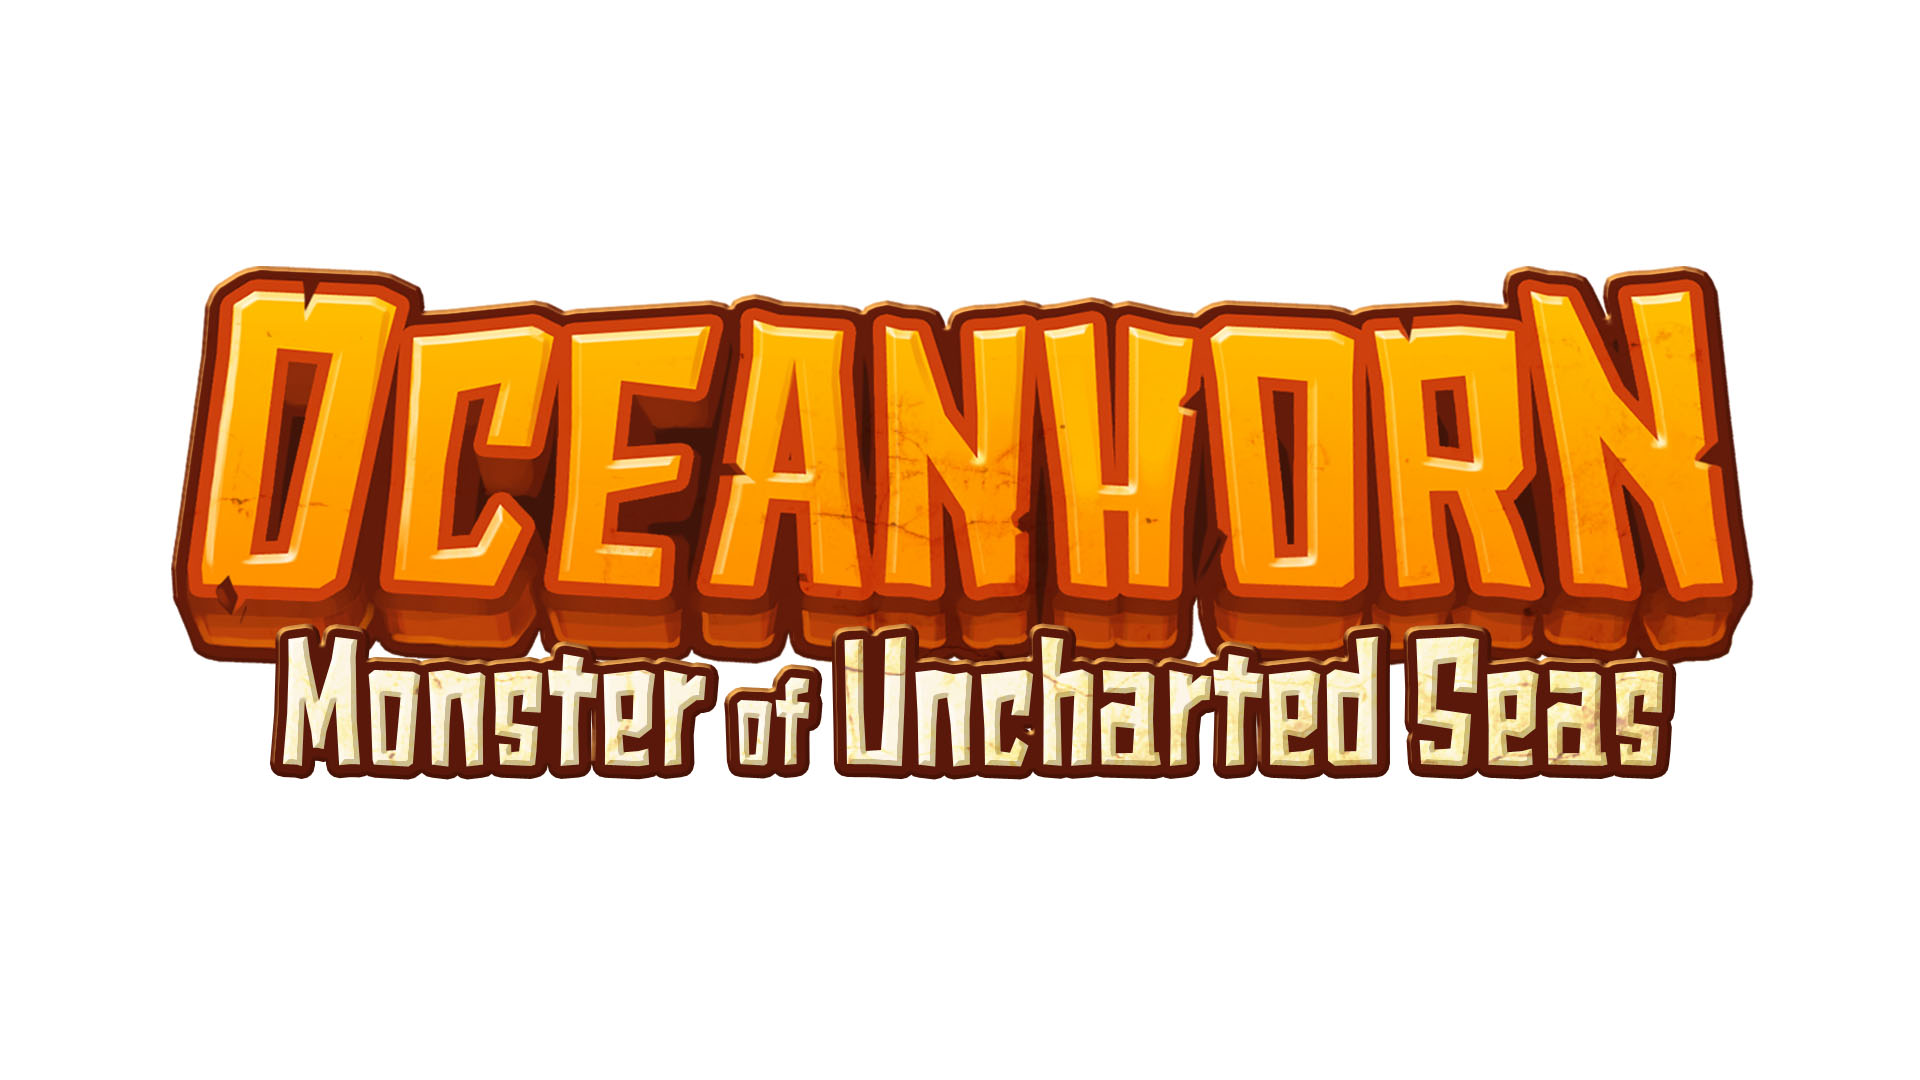 Steam oceanhorn monster of the uncharted seas фото 43